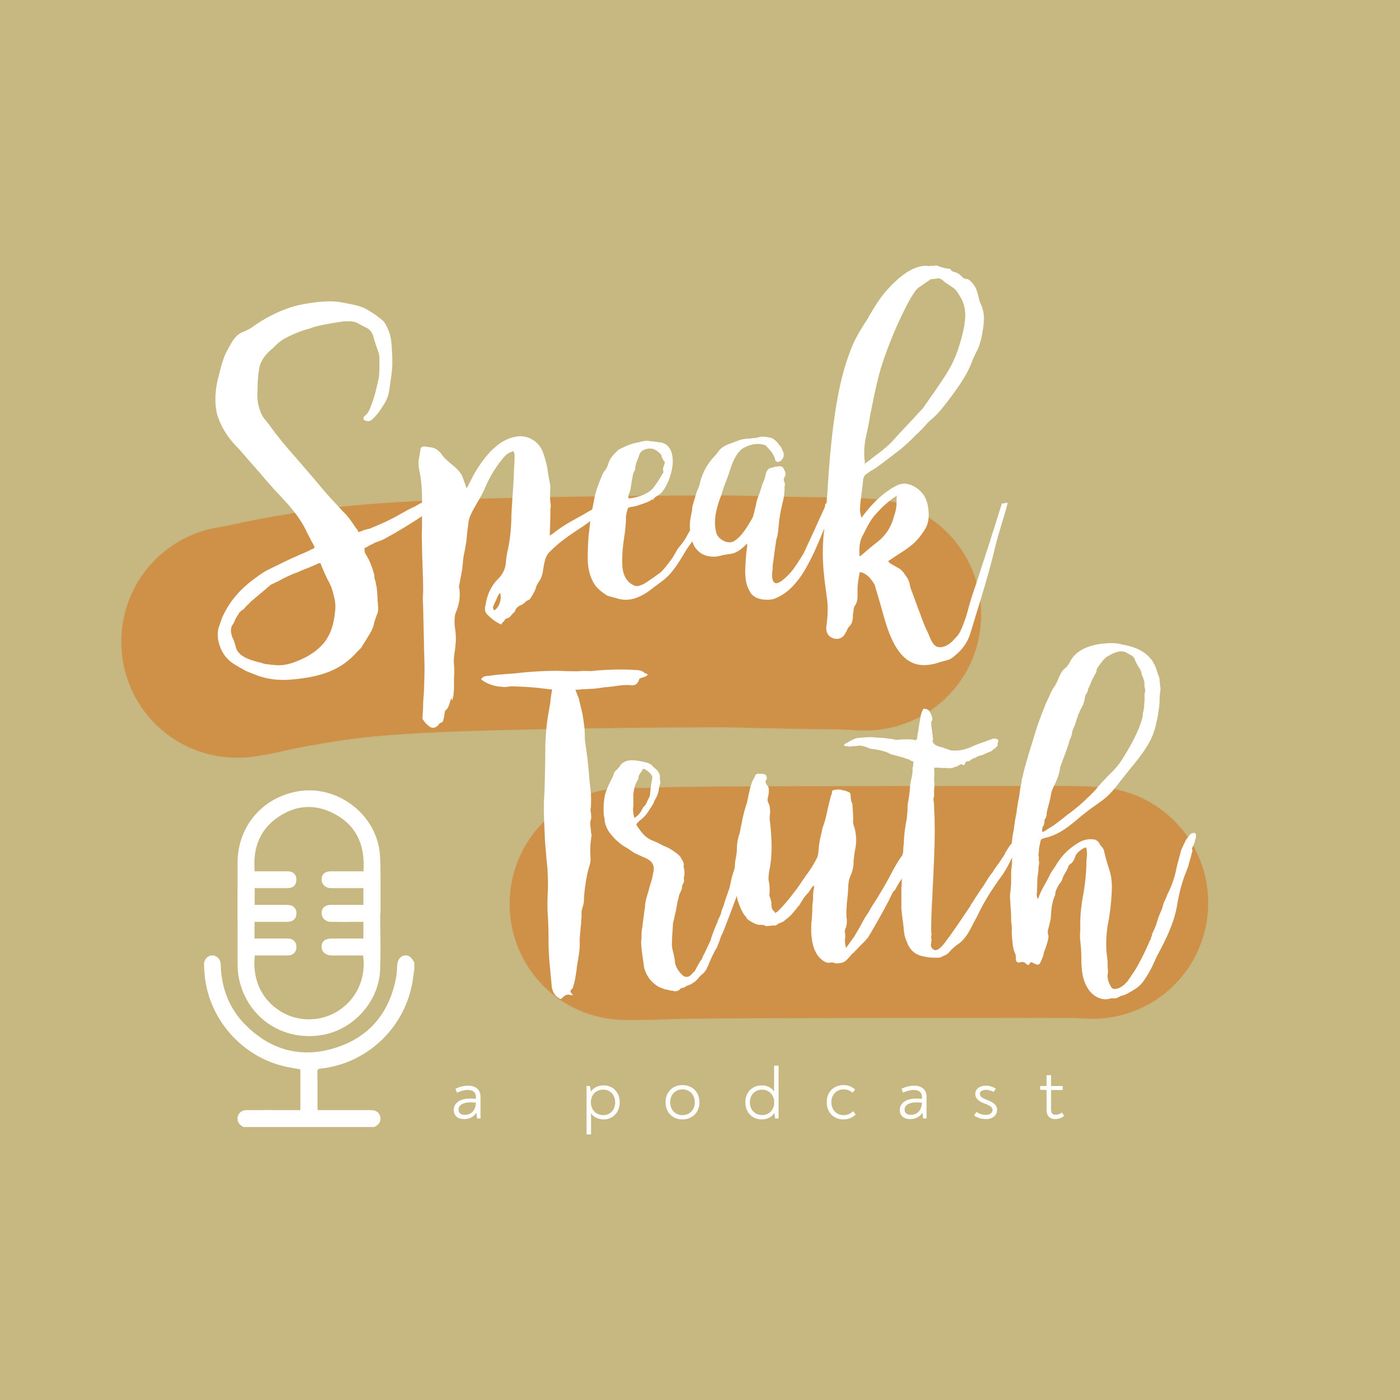 Speak Truth Podcast